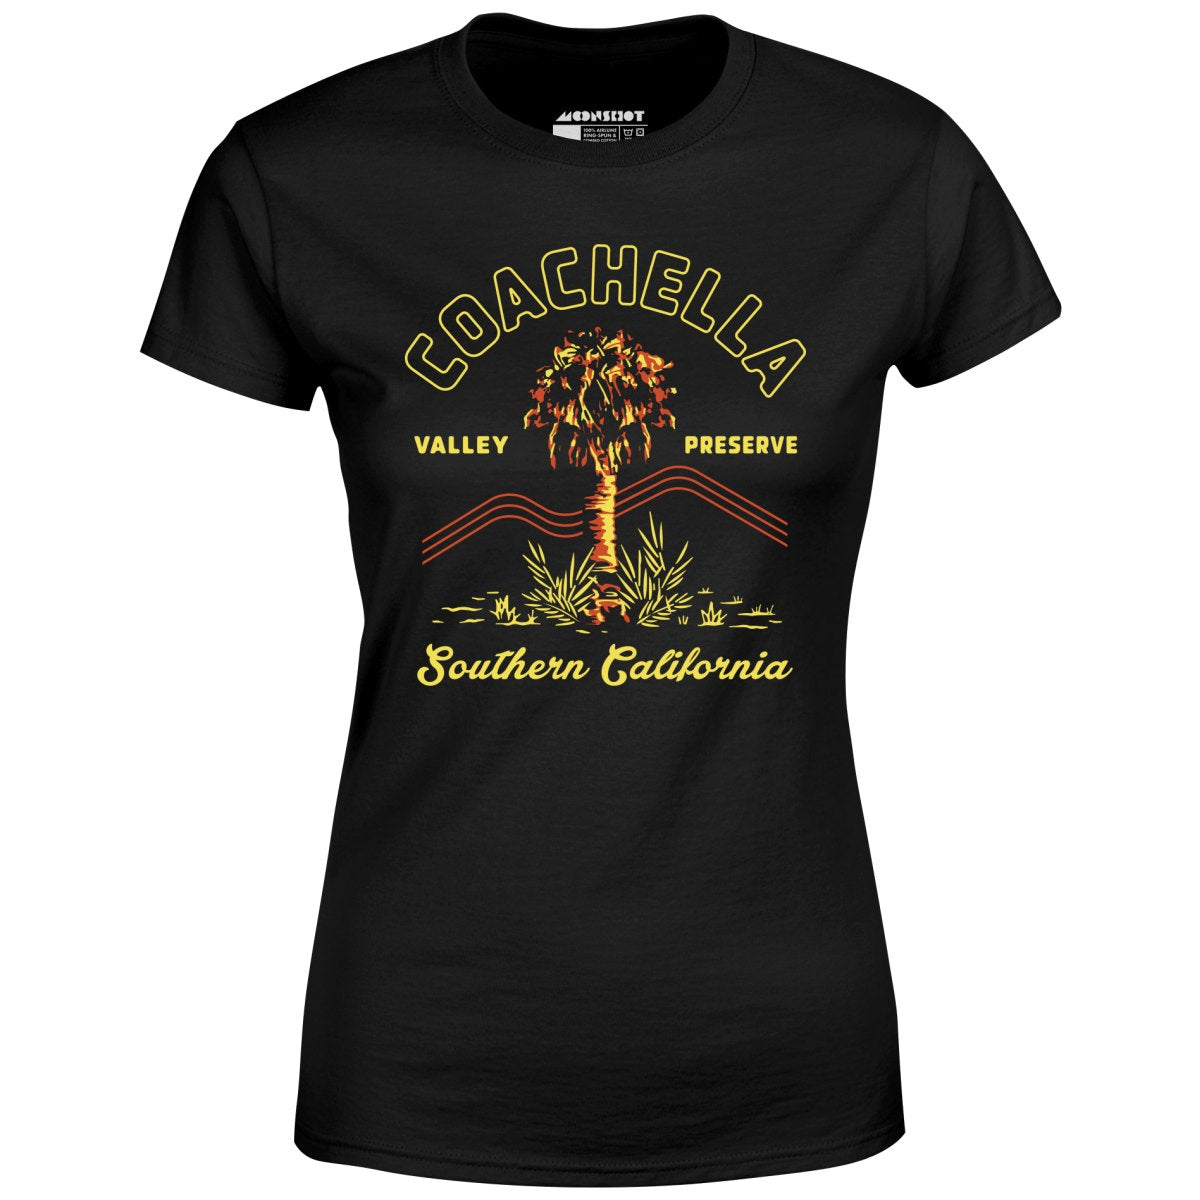 Coachella Valley Preserve - Southern California - Women's T-Shirt